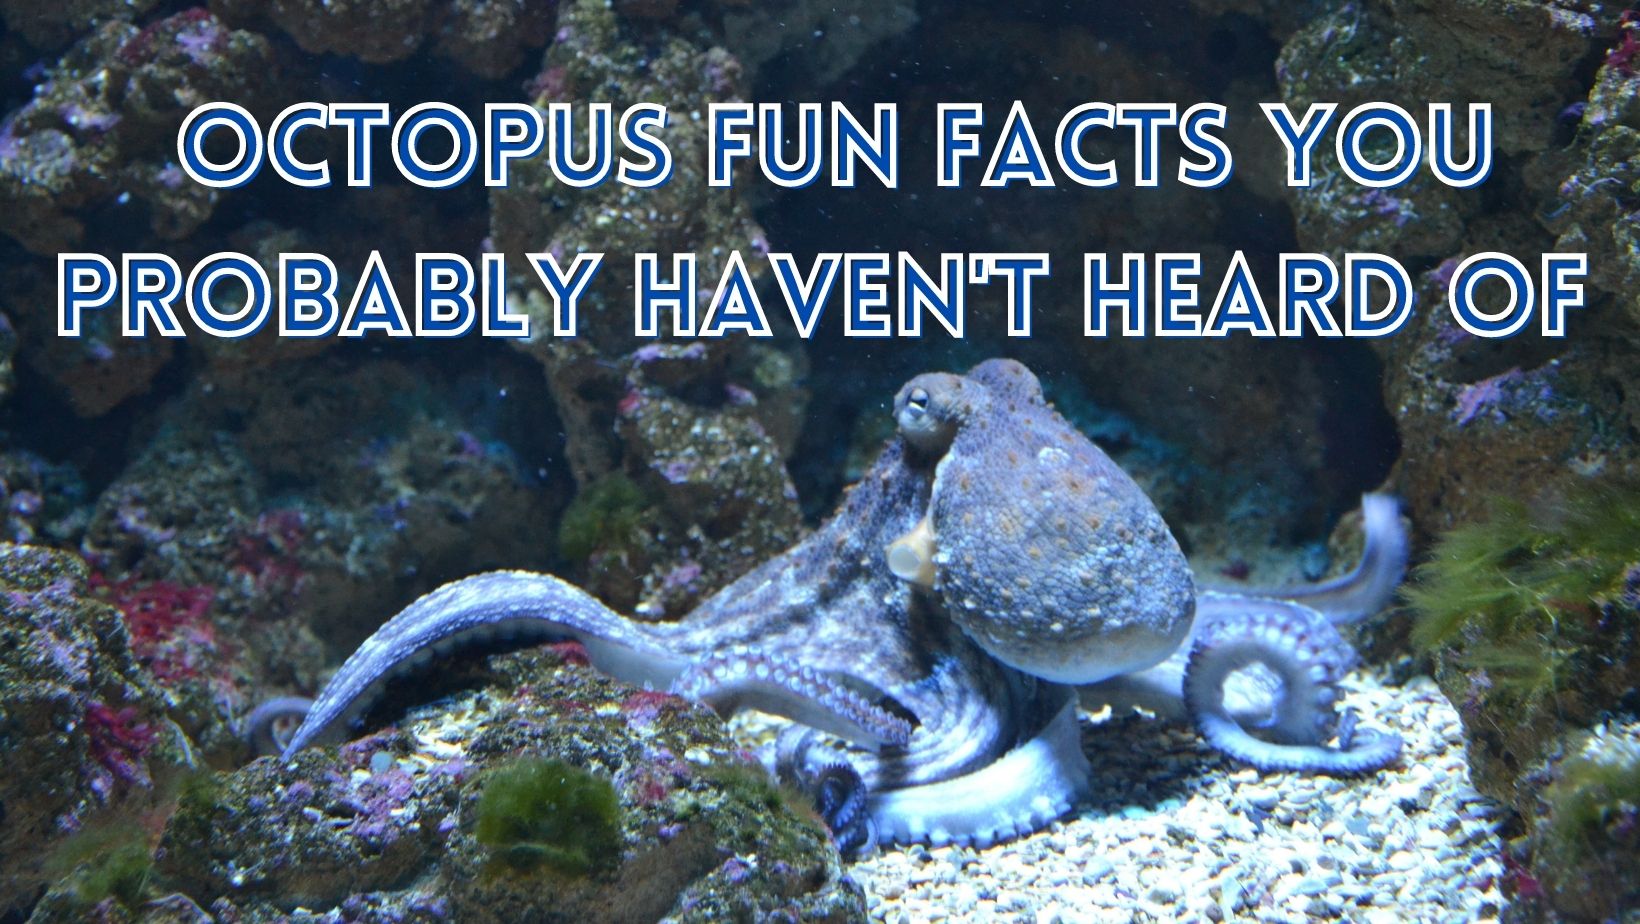 Octopus fun facts